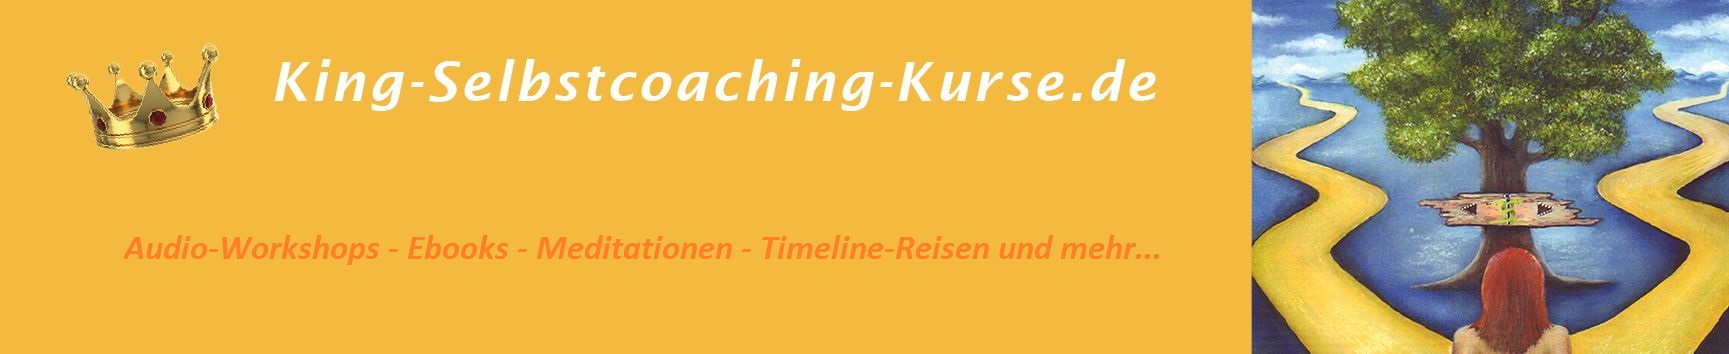 https://king-selbstcoaching-kurse.de/